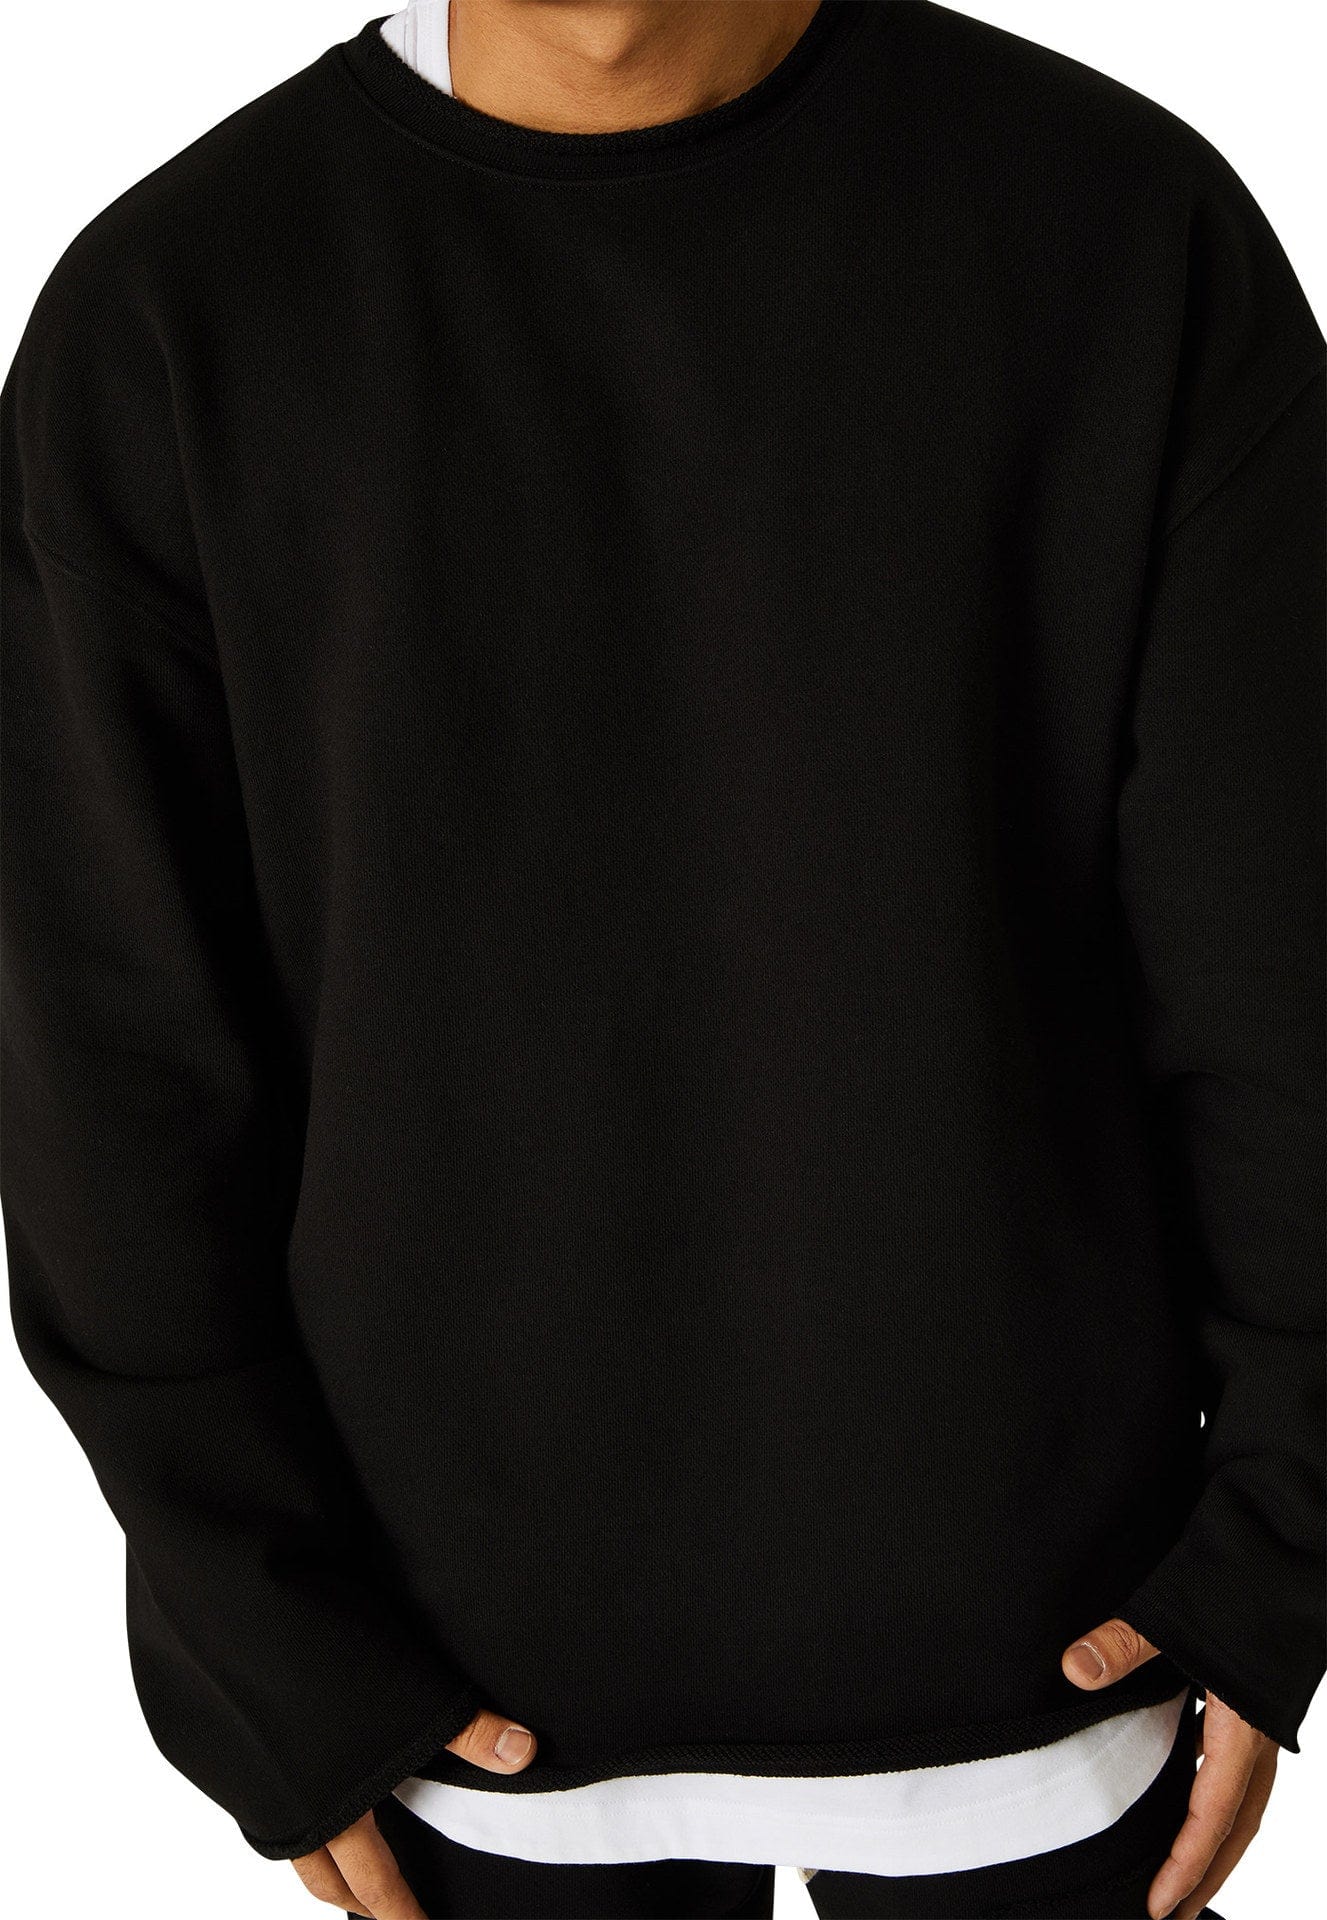 Gym warmup sweatshirt Black